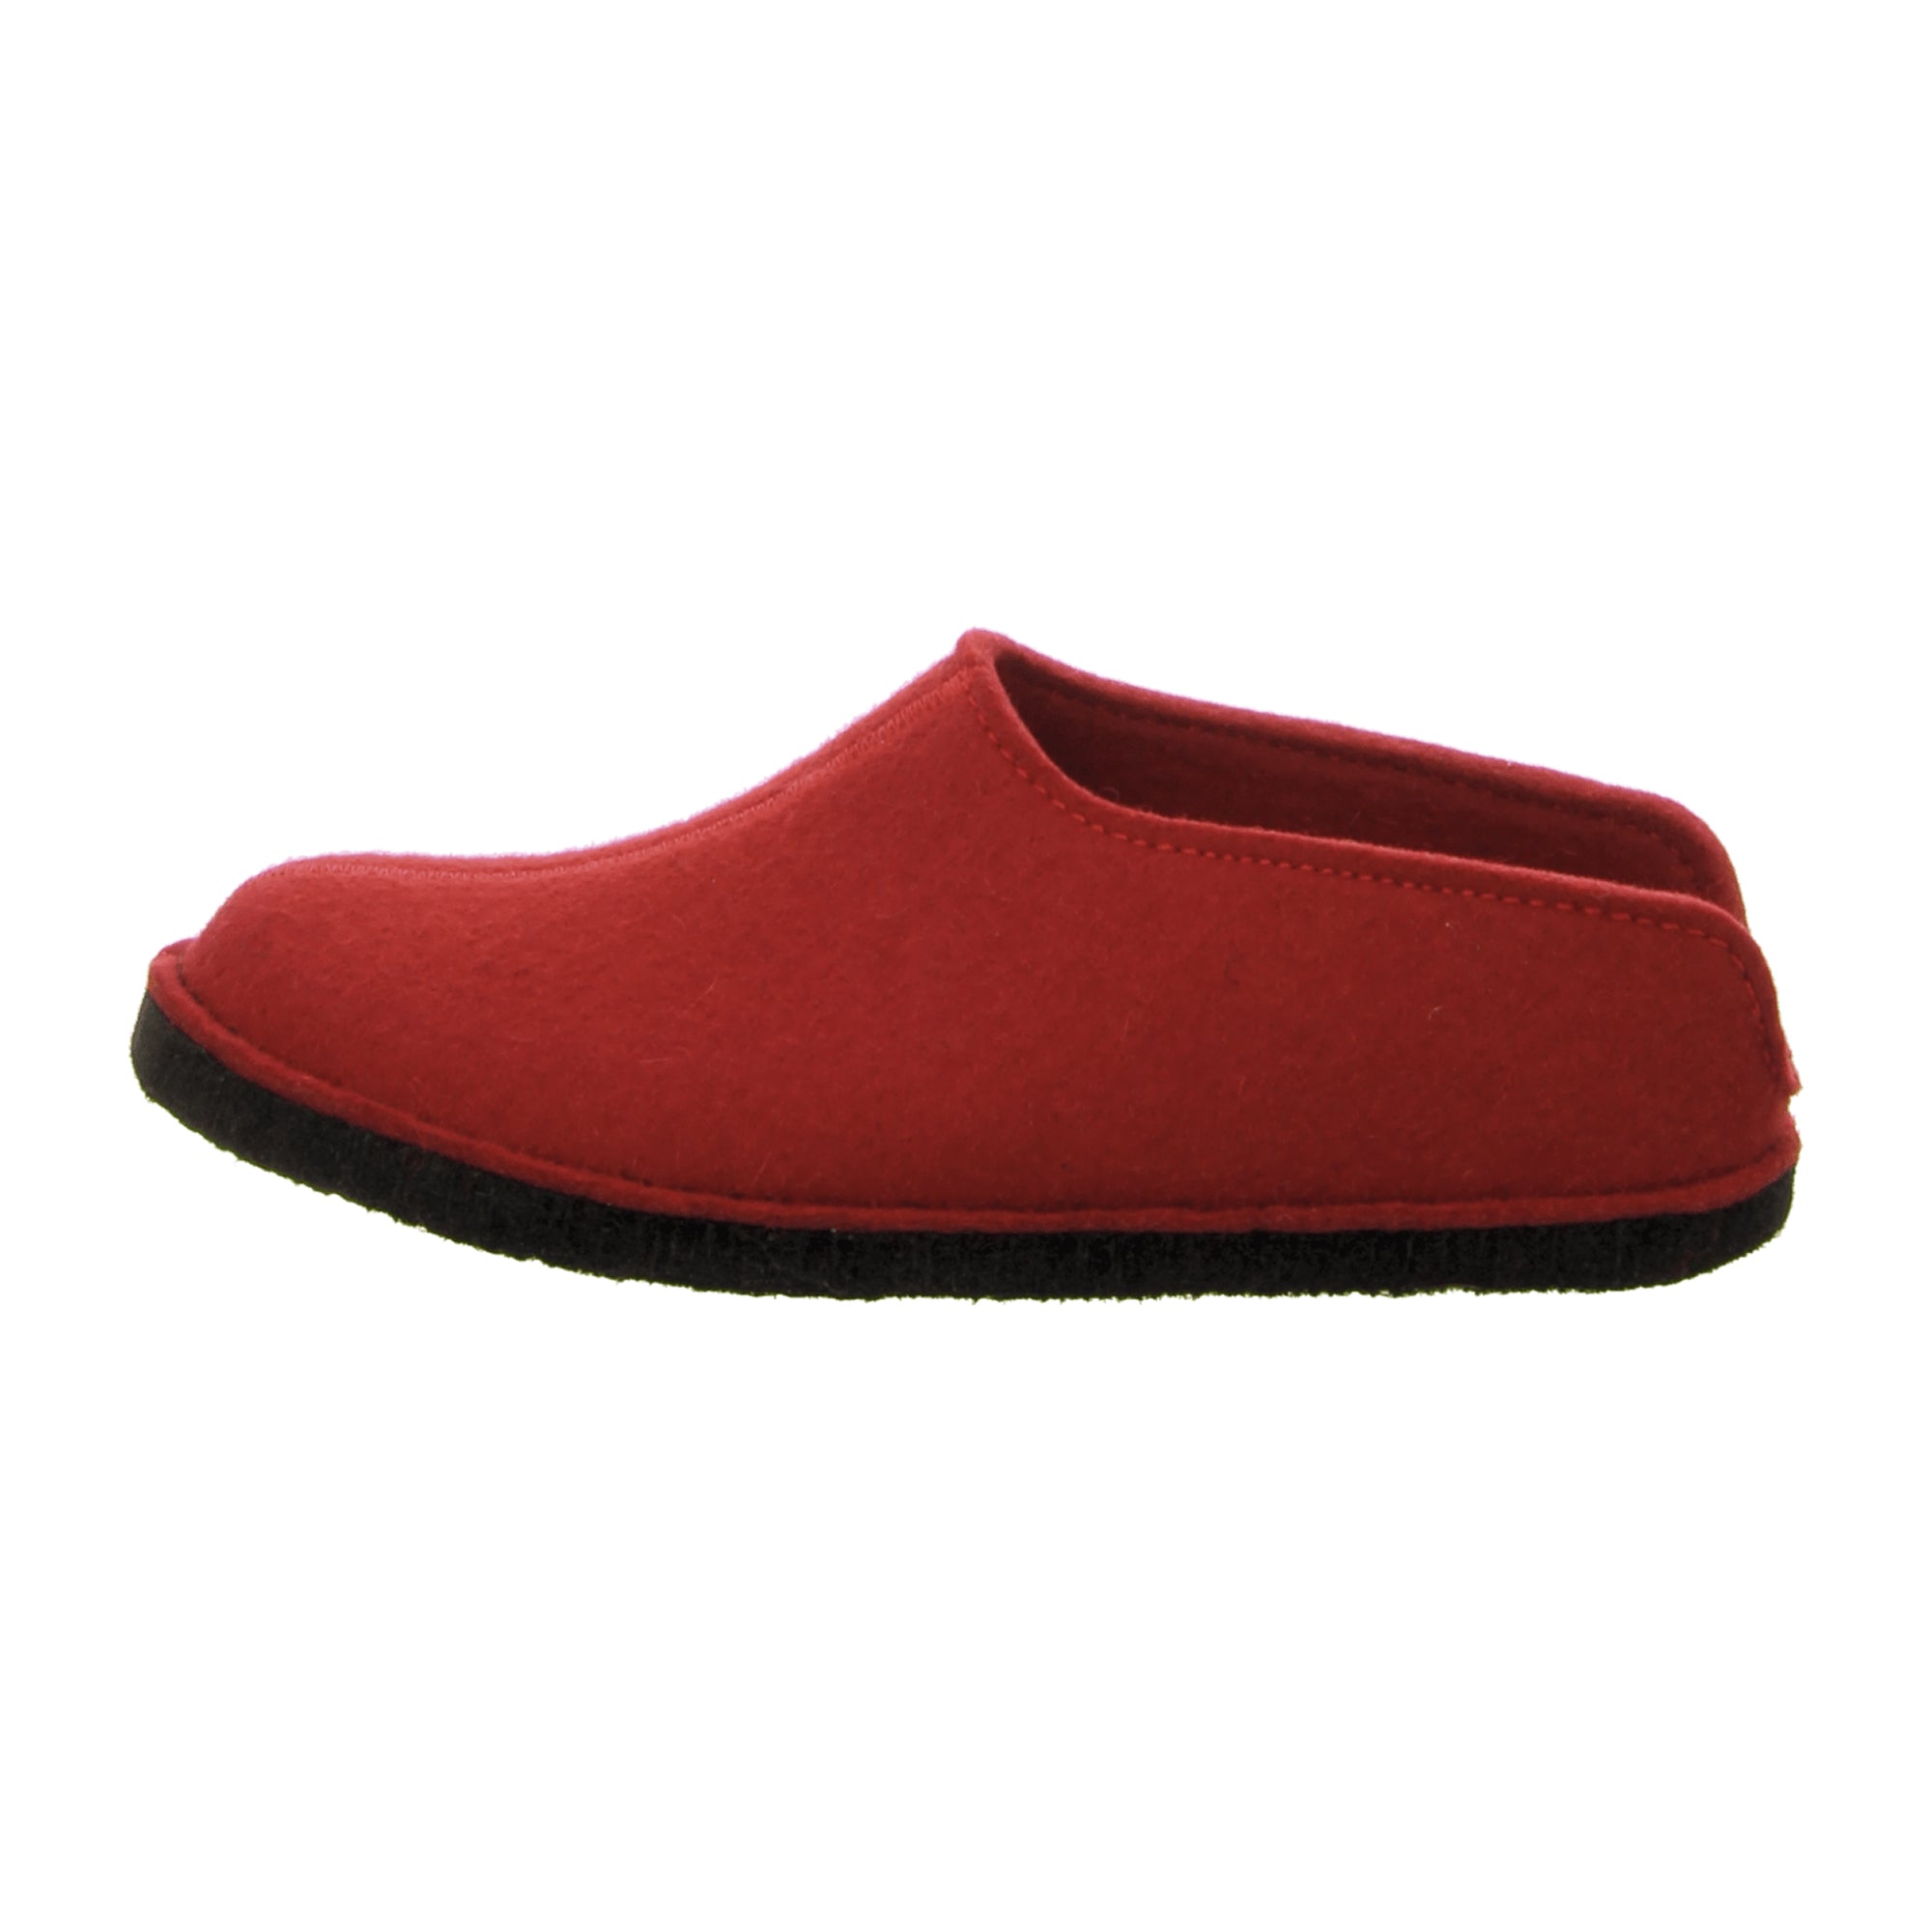 Haflinger Flair Smily Men's Slippers, Vibrant Red - Comfortable & Durable